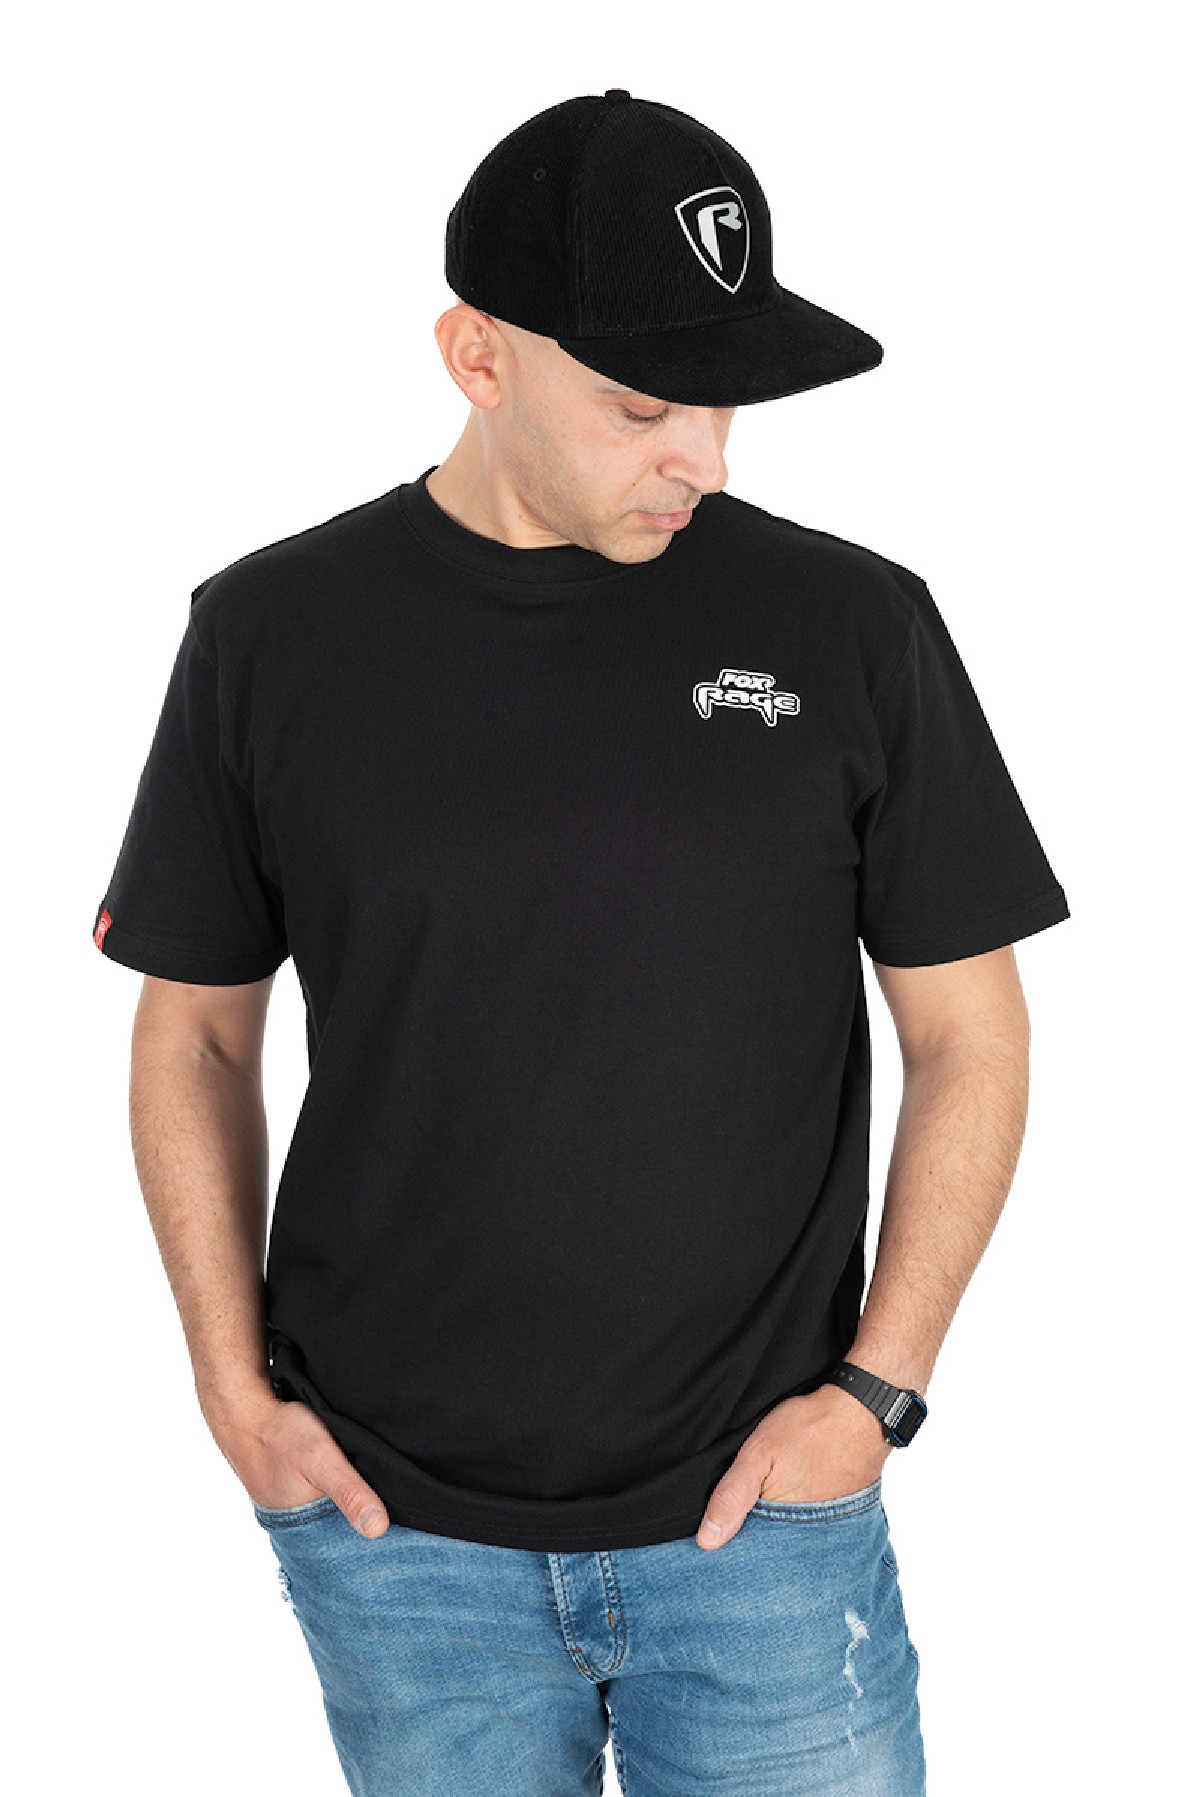 Fox Ragewear Tee Shirt Medium